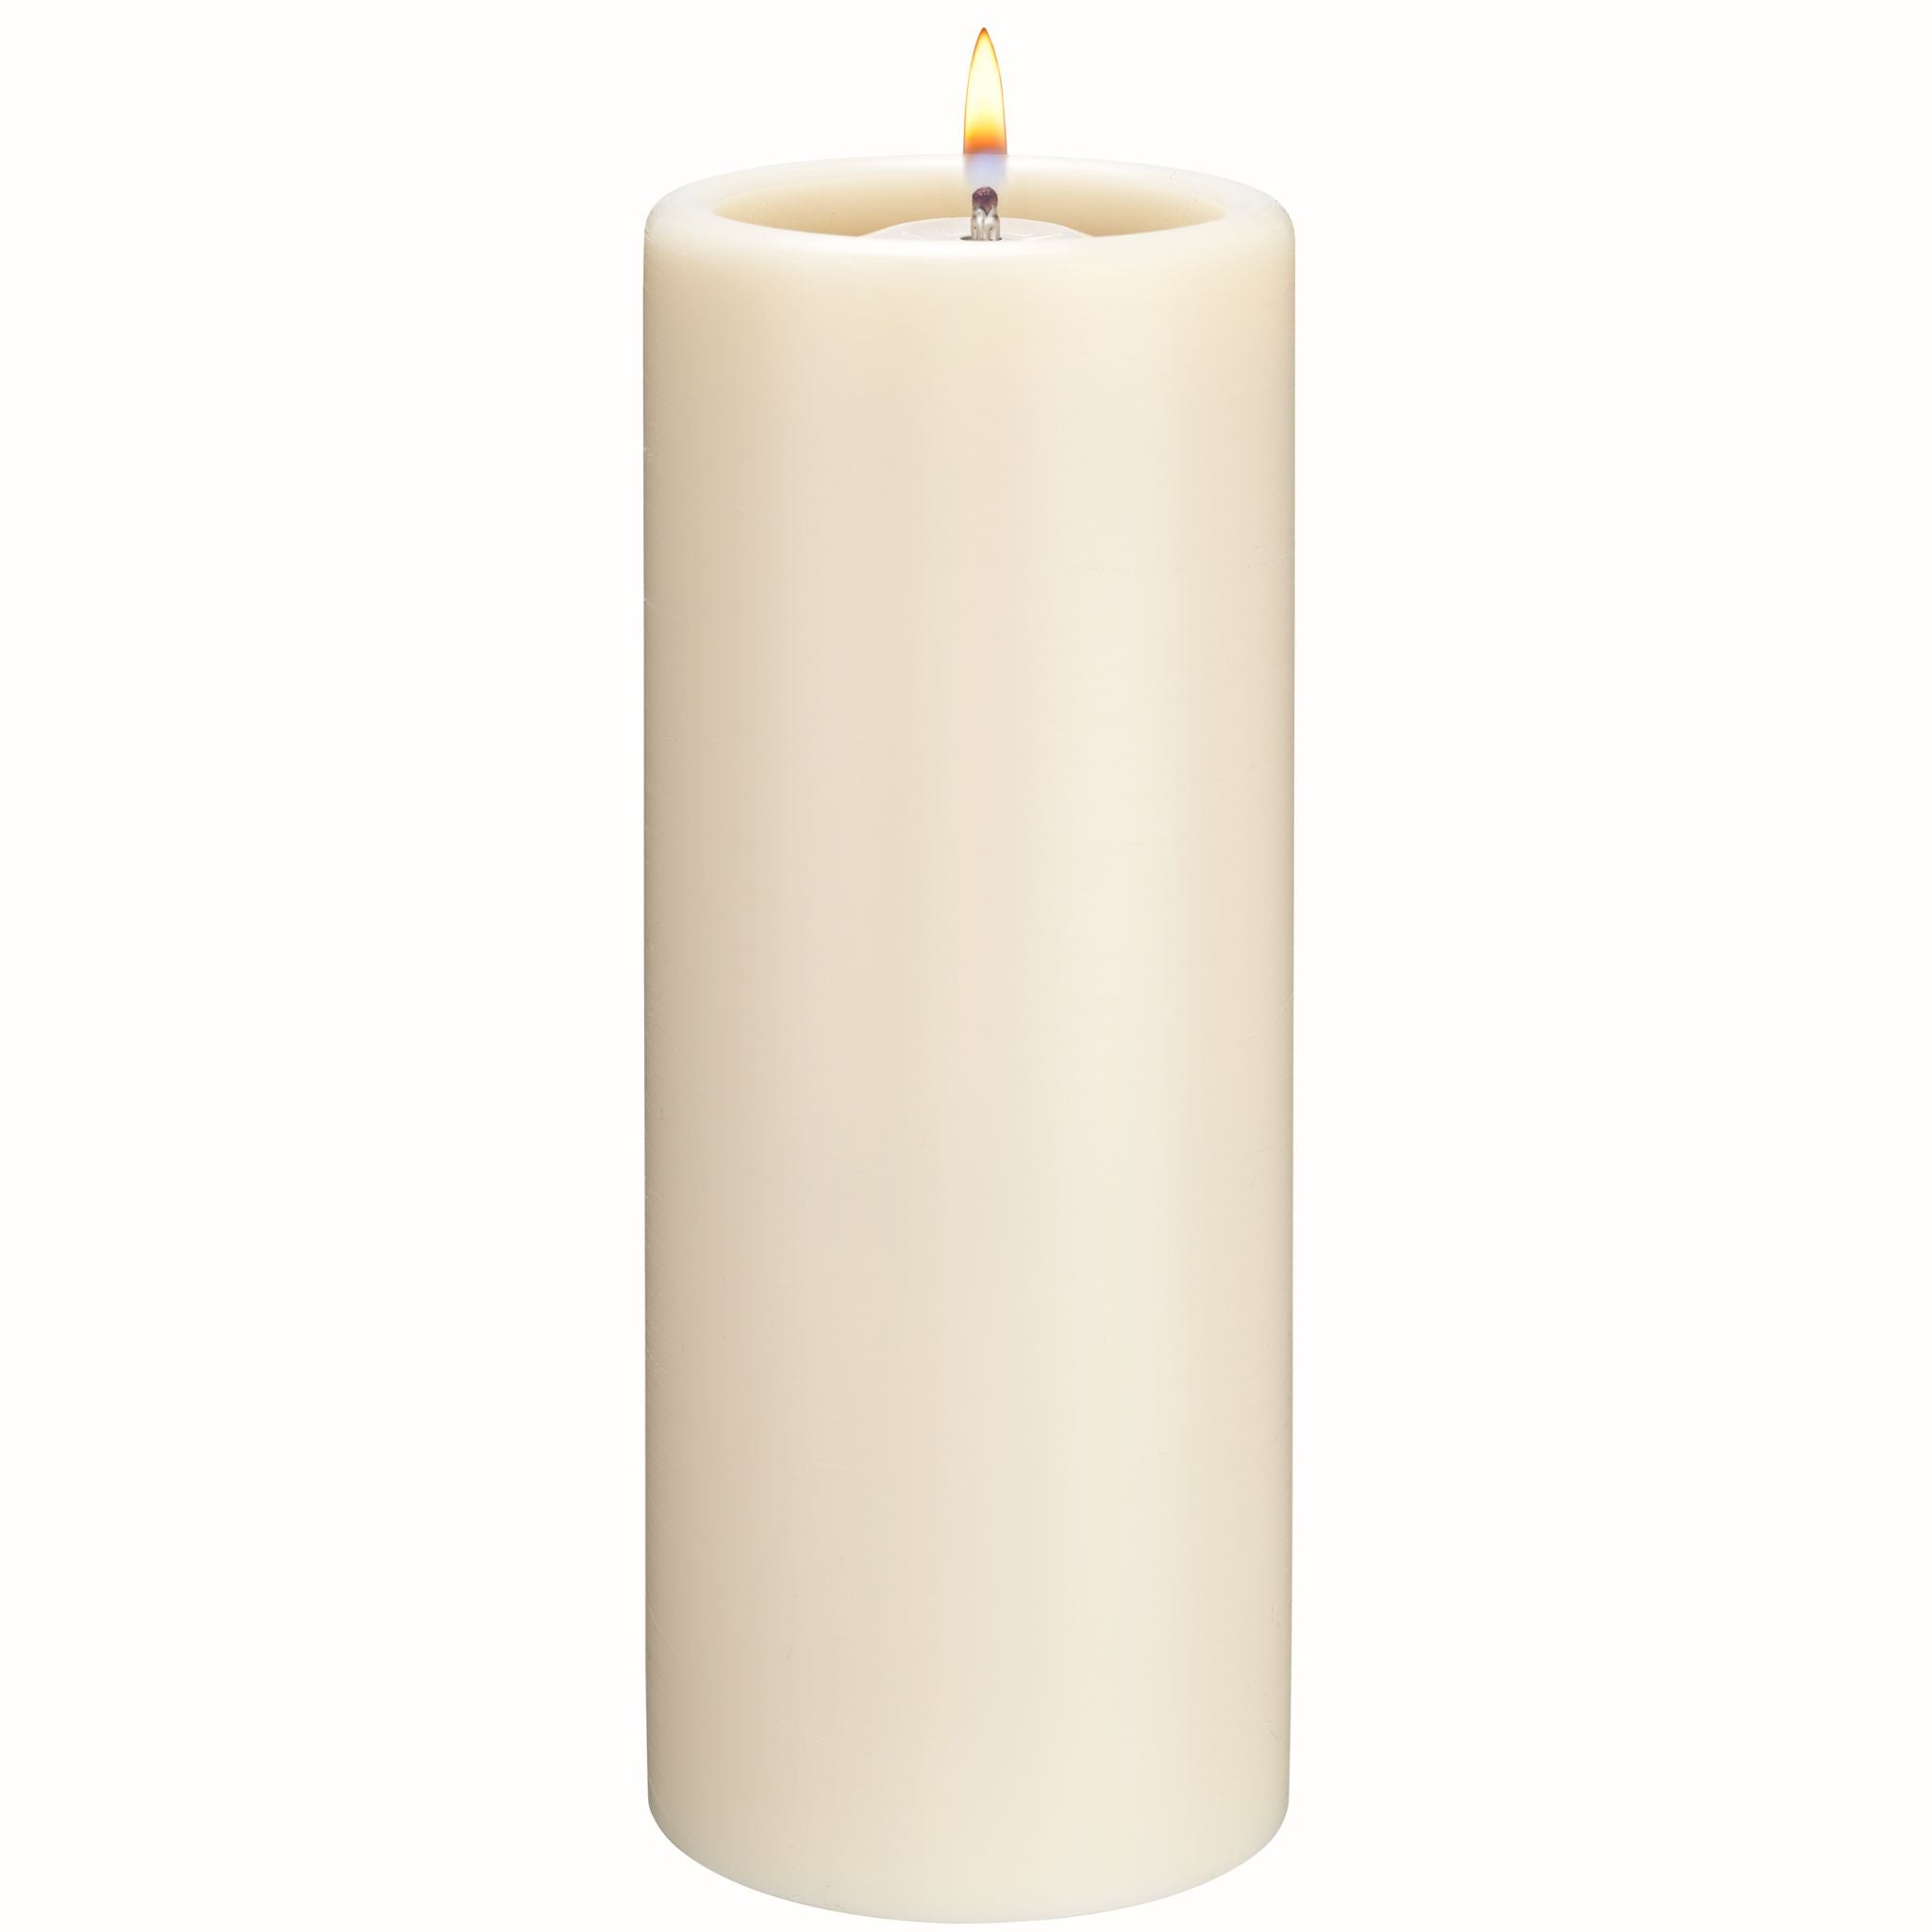 Safety candle for eternal burner 20AL 2 pieces